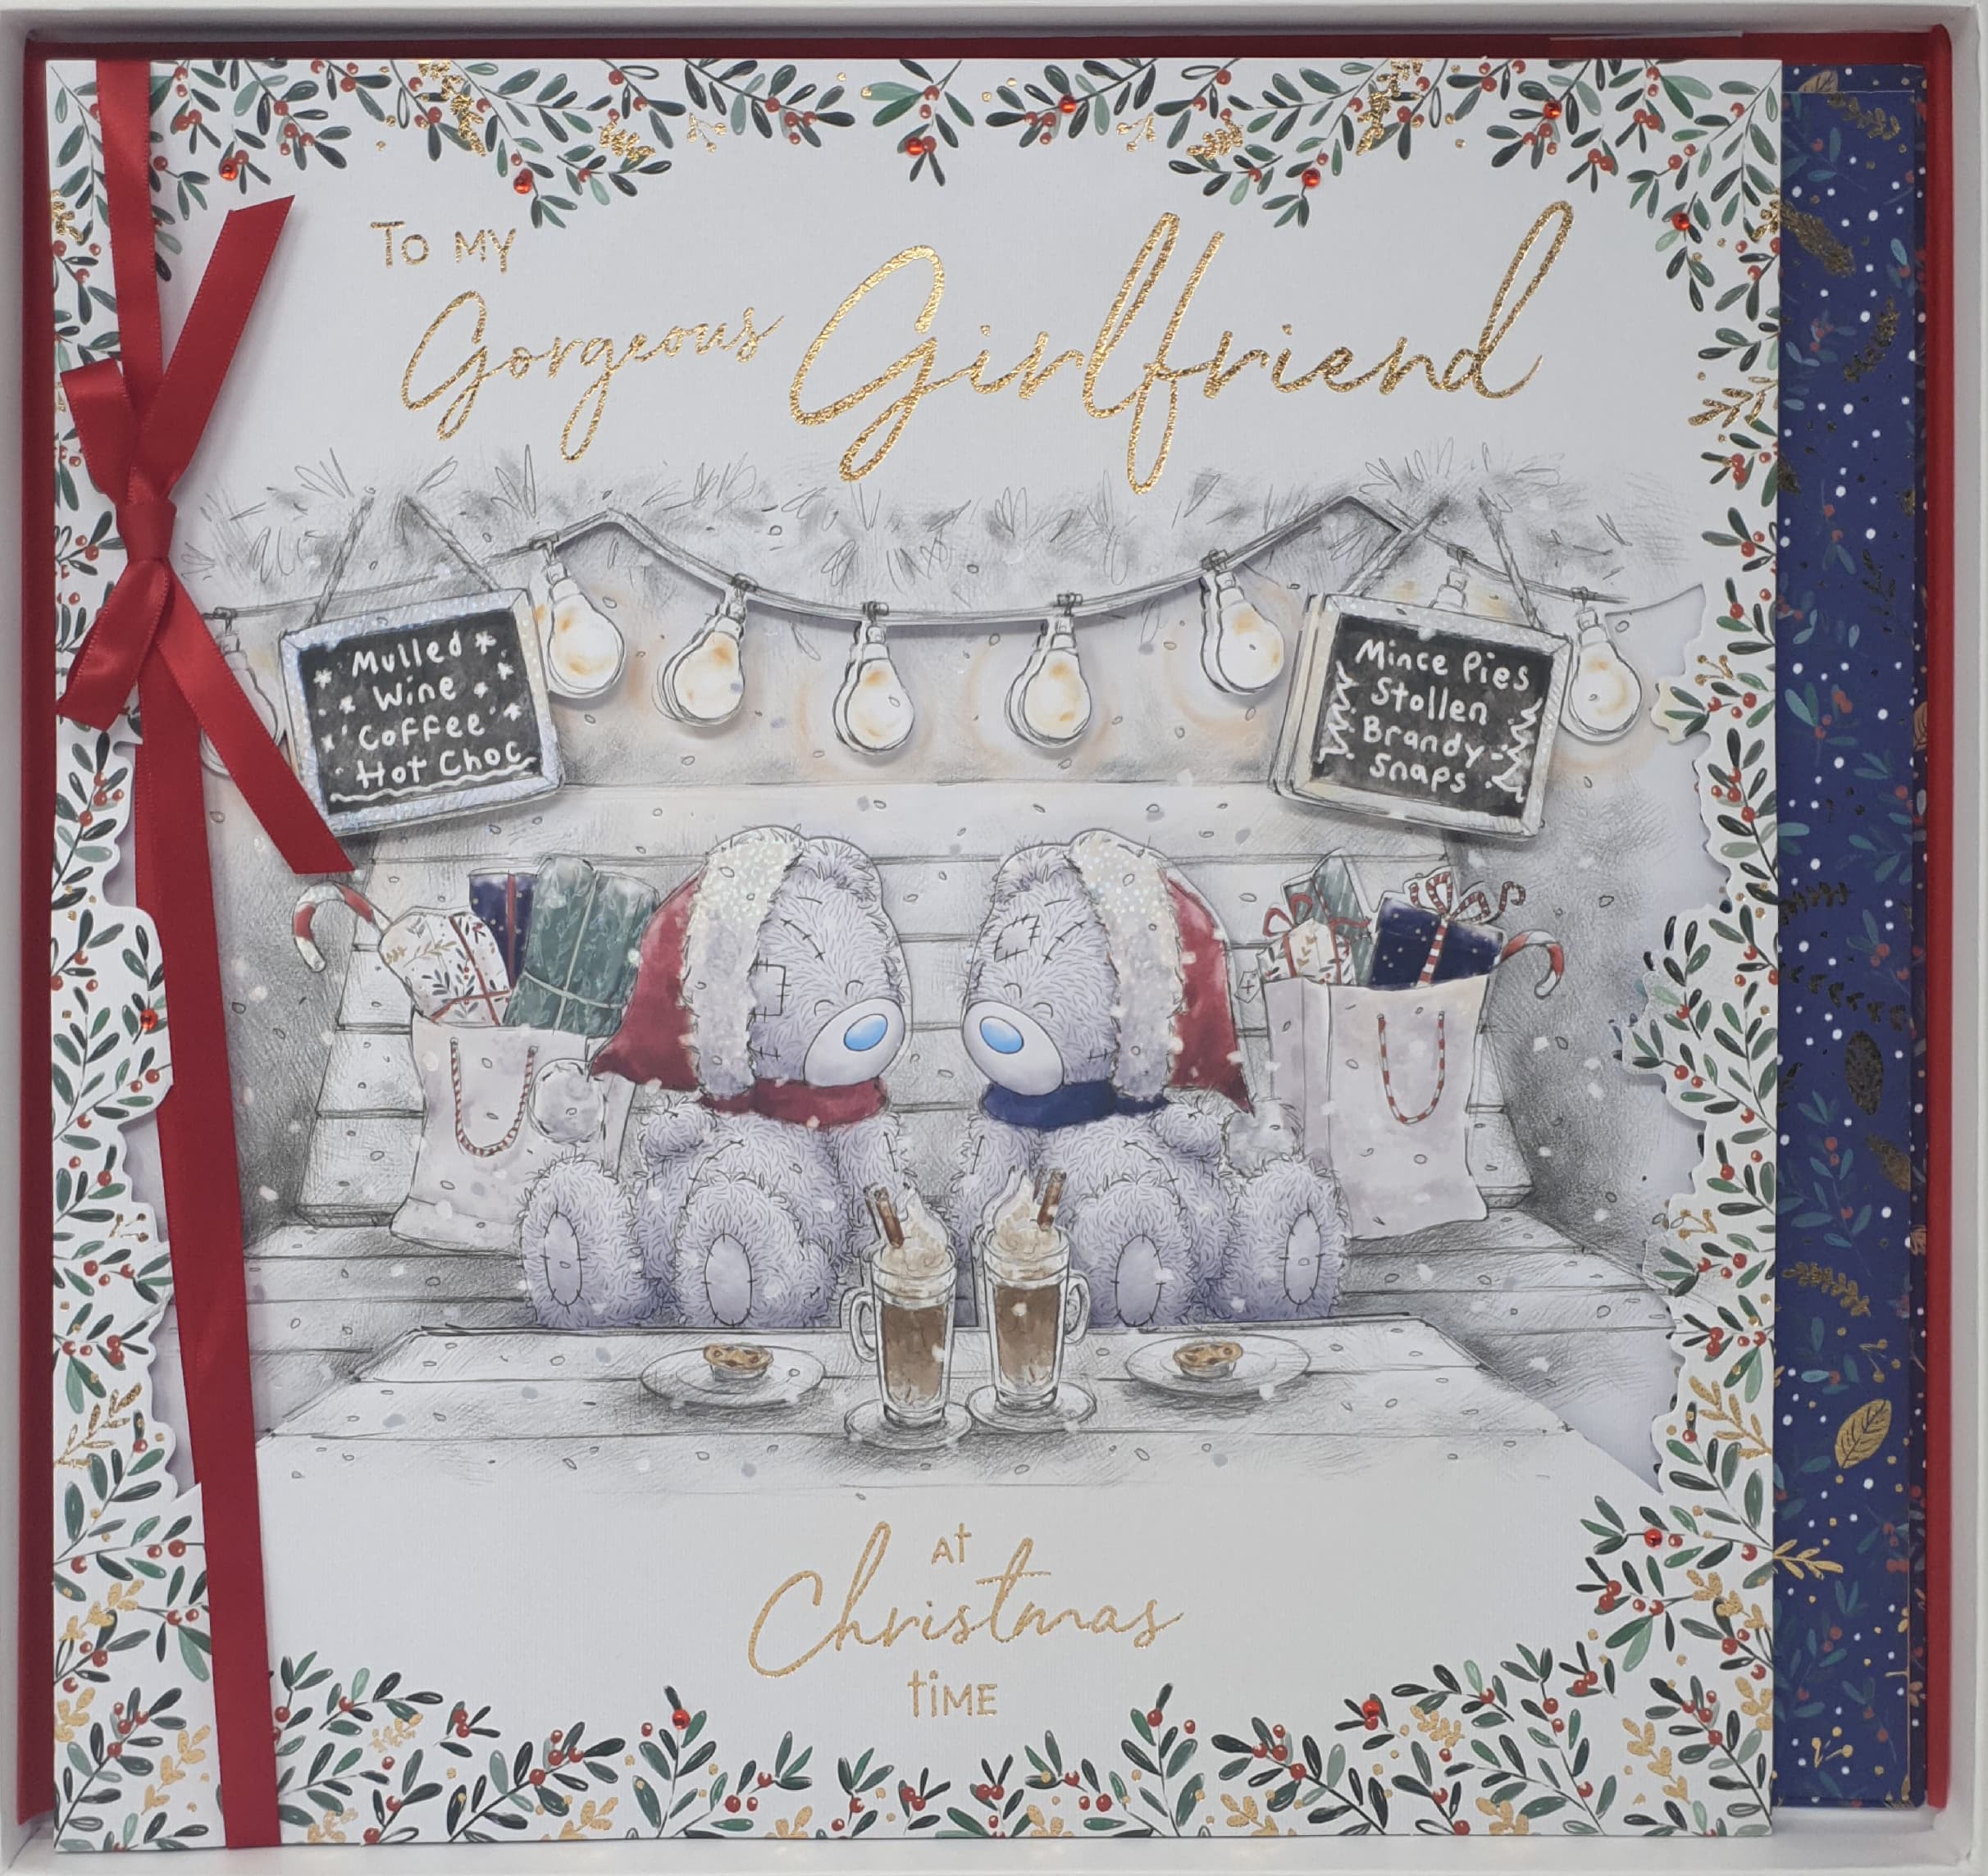 Girlfriend Christmas Card / Teddy Bears with Hot Chocolate (Card In A Presentation Box)